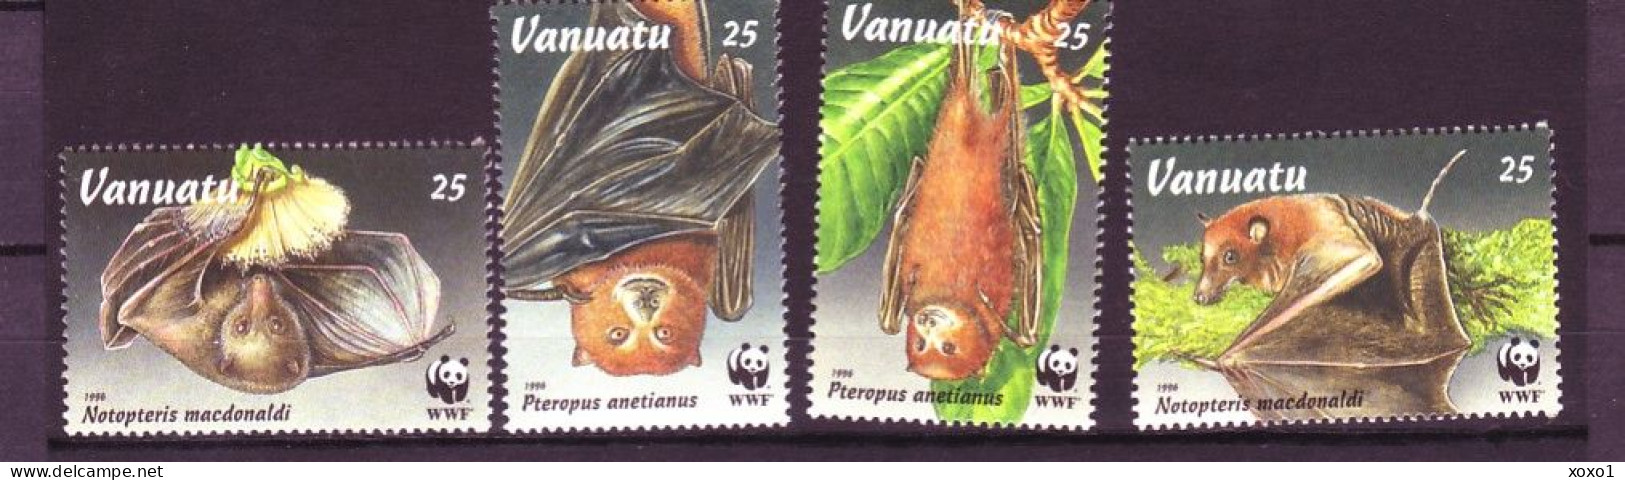 Vanuatu 1996 MiNr. 1004 - 1009 WWF Mammals Bats Insular Flying Fox, Fijian Blossom Bat  4v  MNH** 3.60 € - Murciélagos